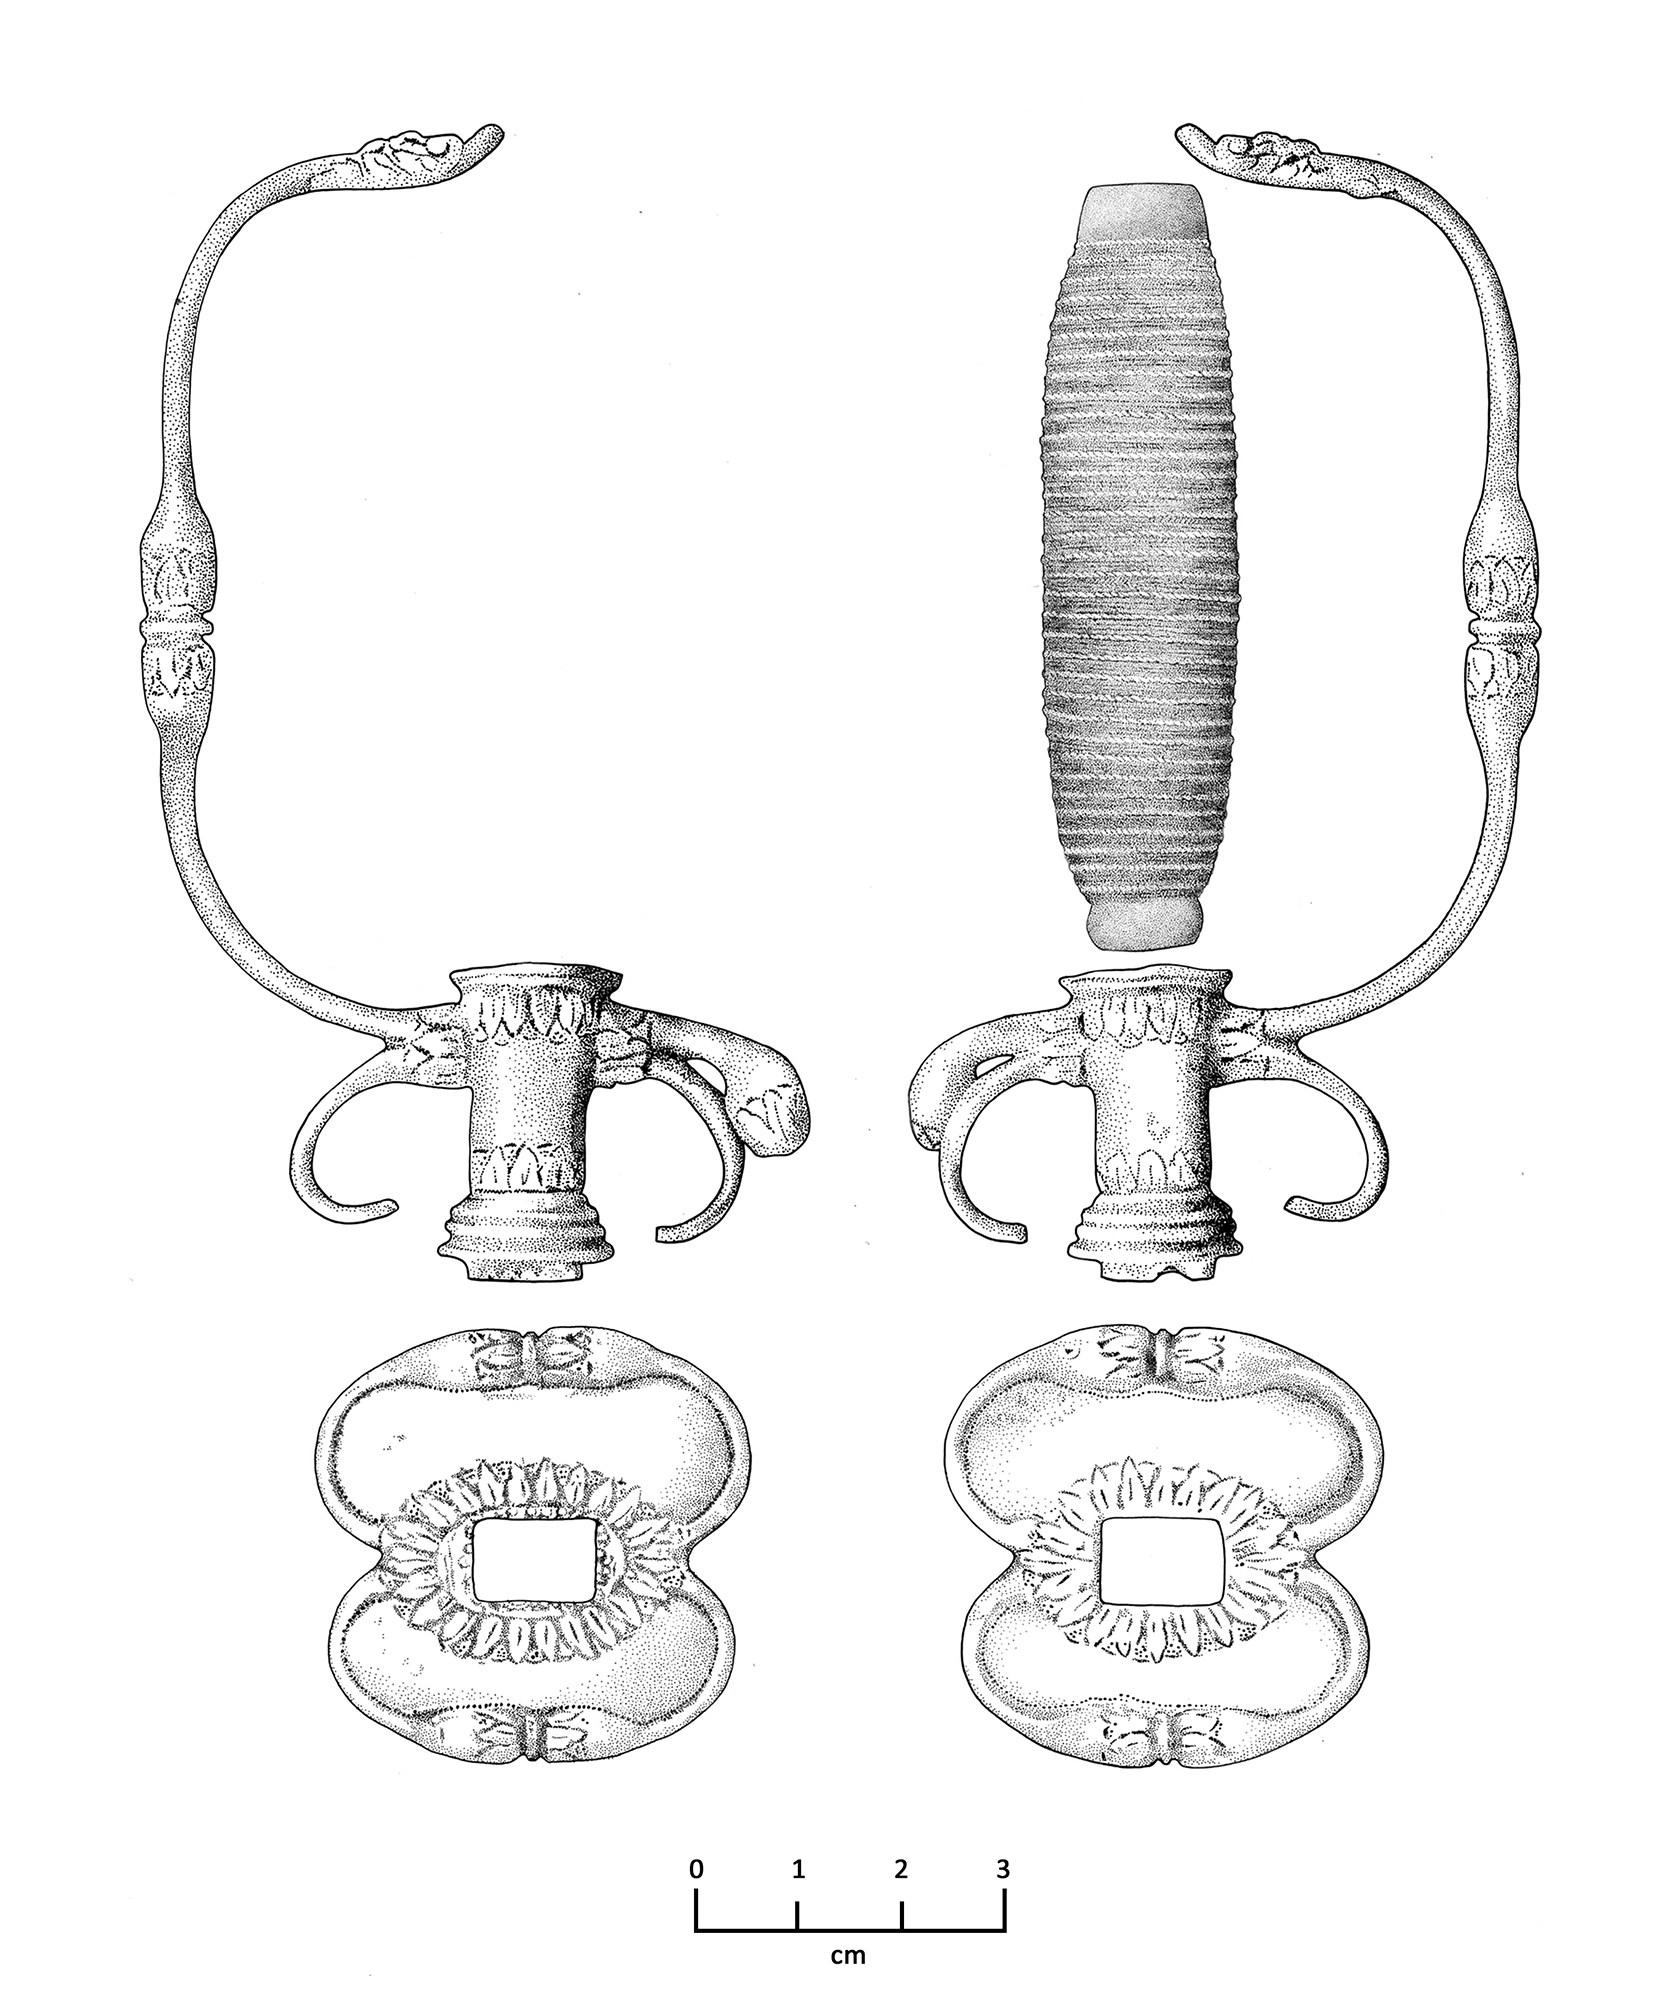 a detailed black and white illustration of ornate sword hilt parts